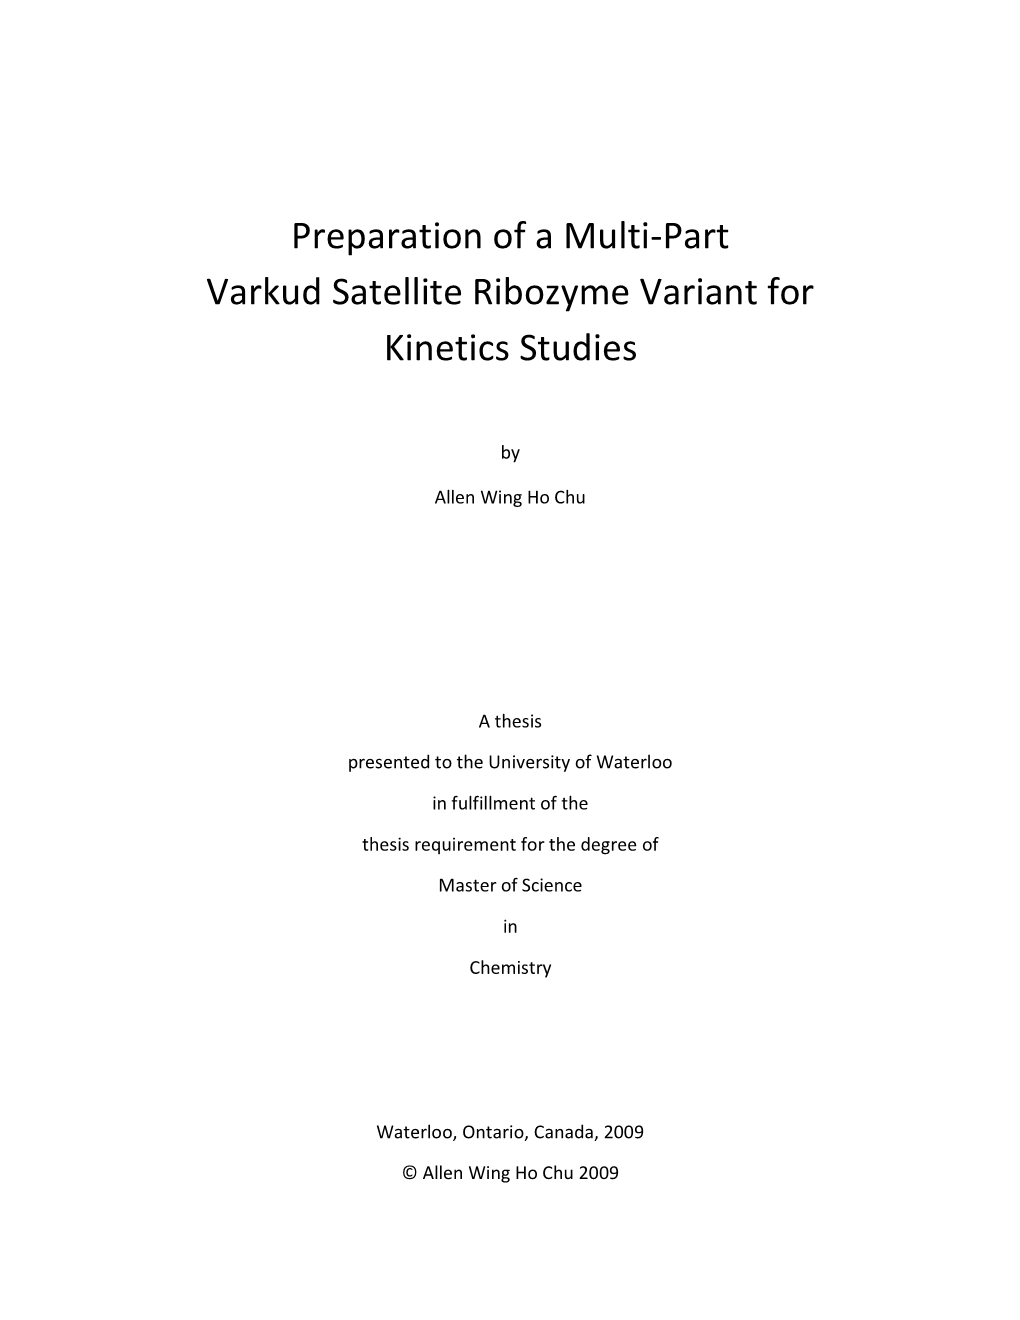 Preparation of a Multi-Part Varkud Satellite Ribozyme Variant for Kinetics Studies